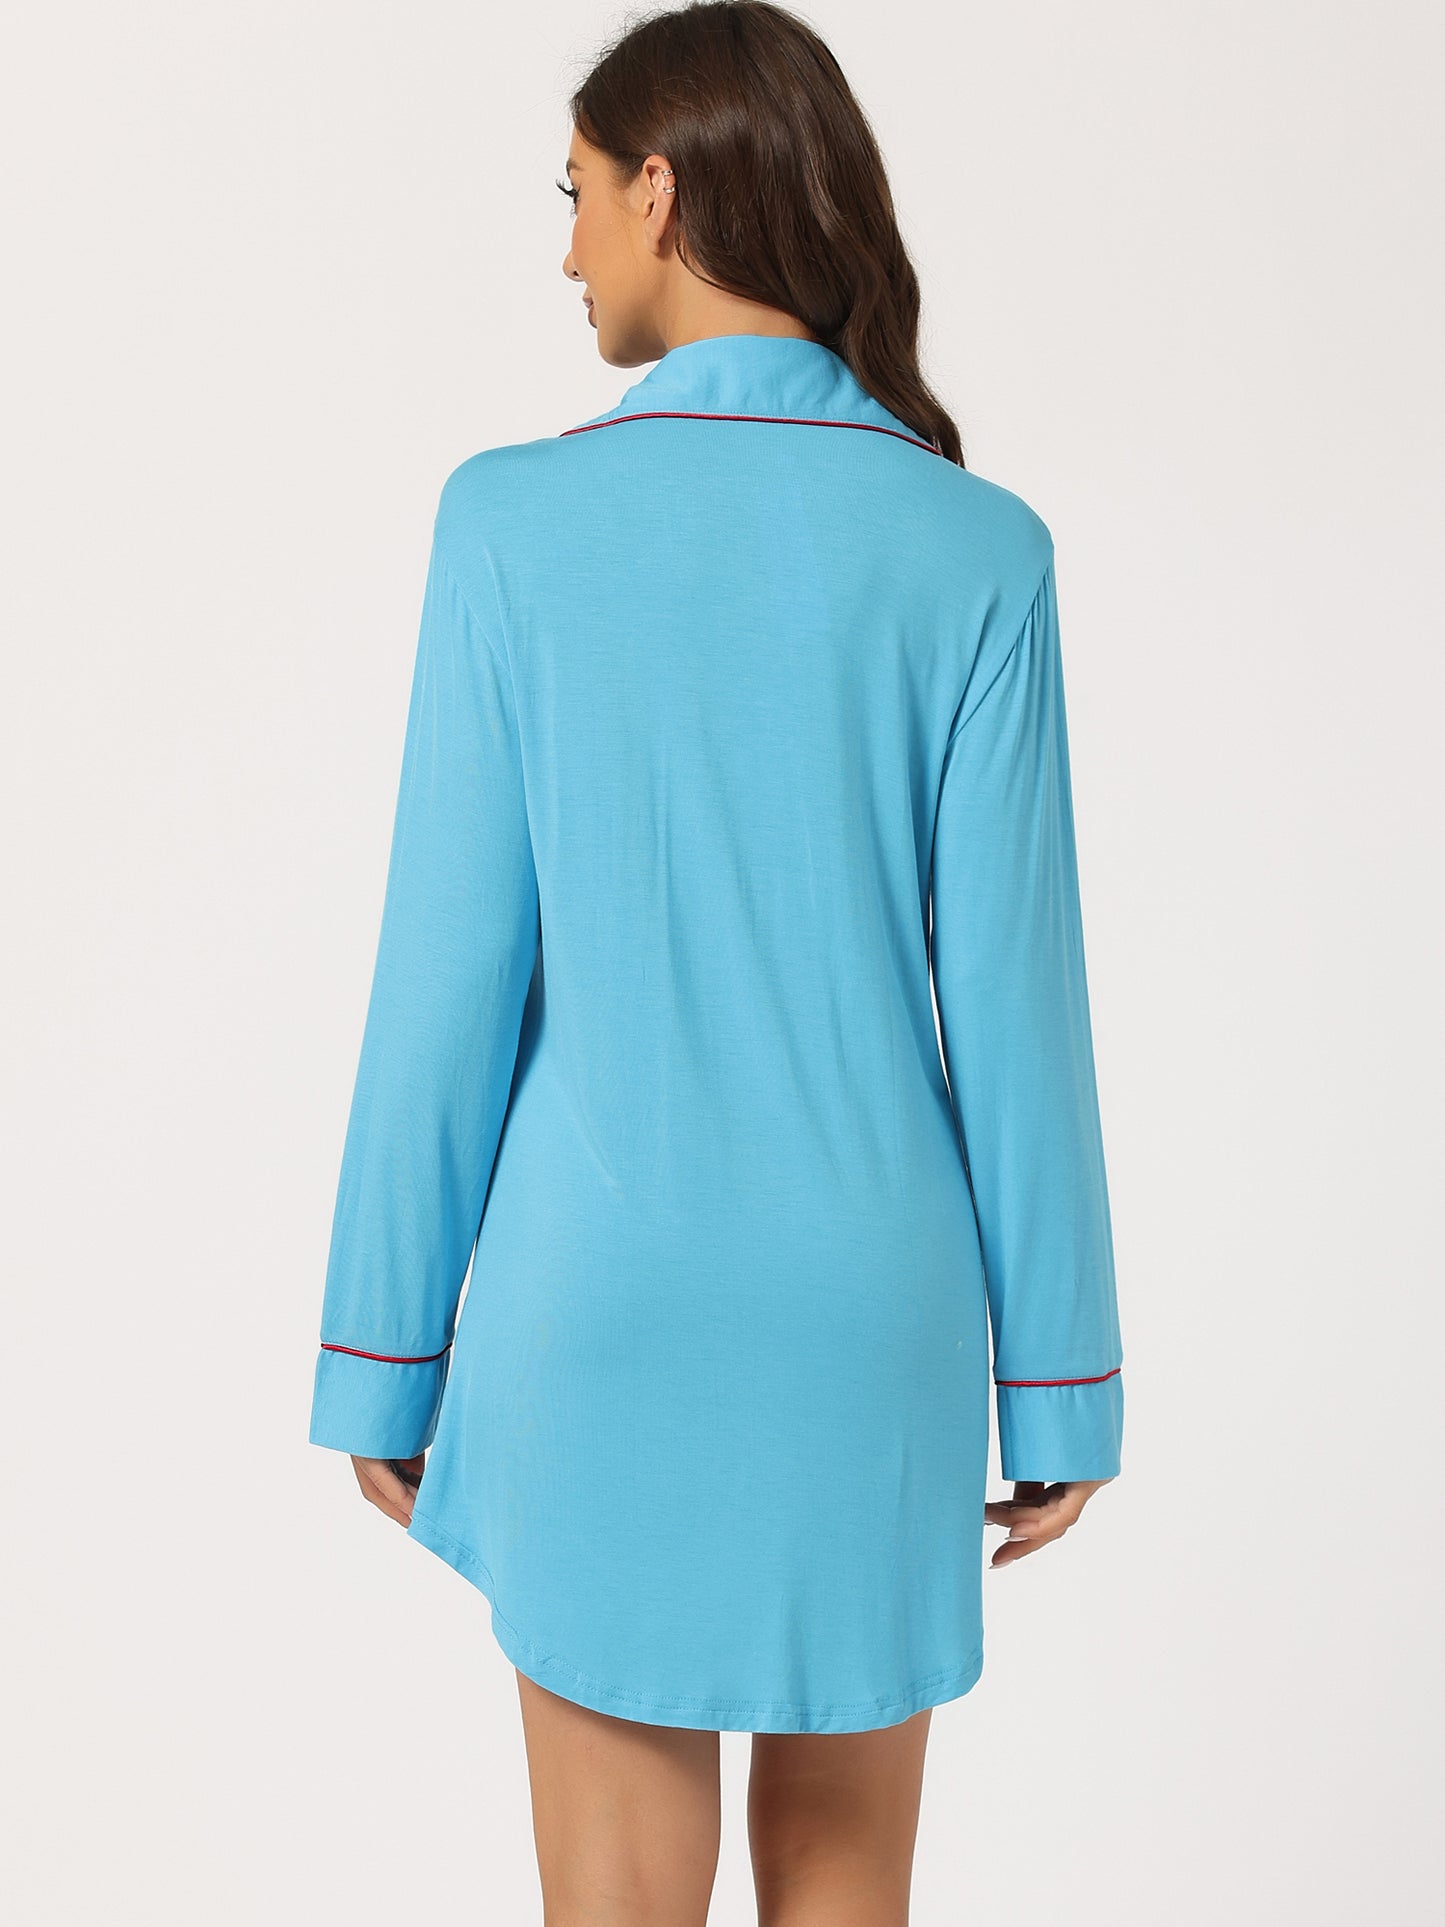 cheibear Pajamas Nightshirt Short Sleeves Button Down Shirt Dress Sky Blue